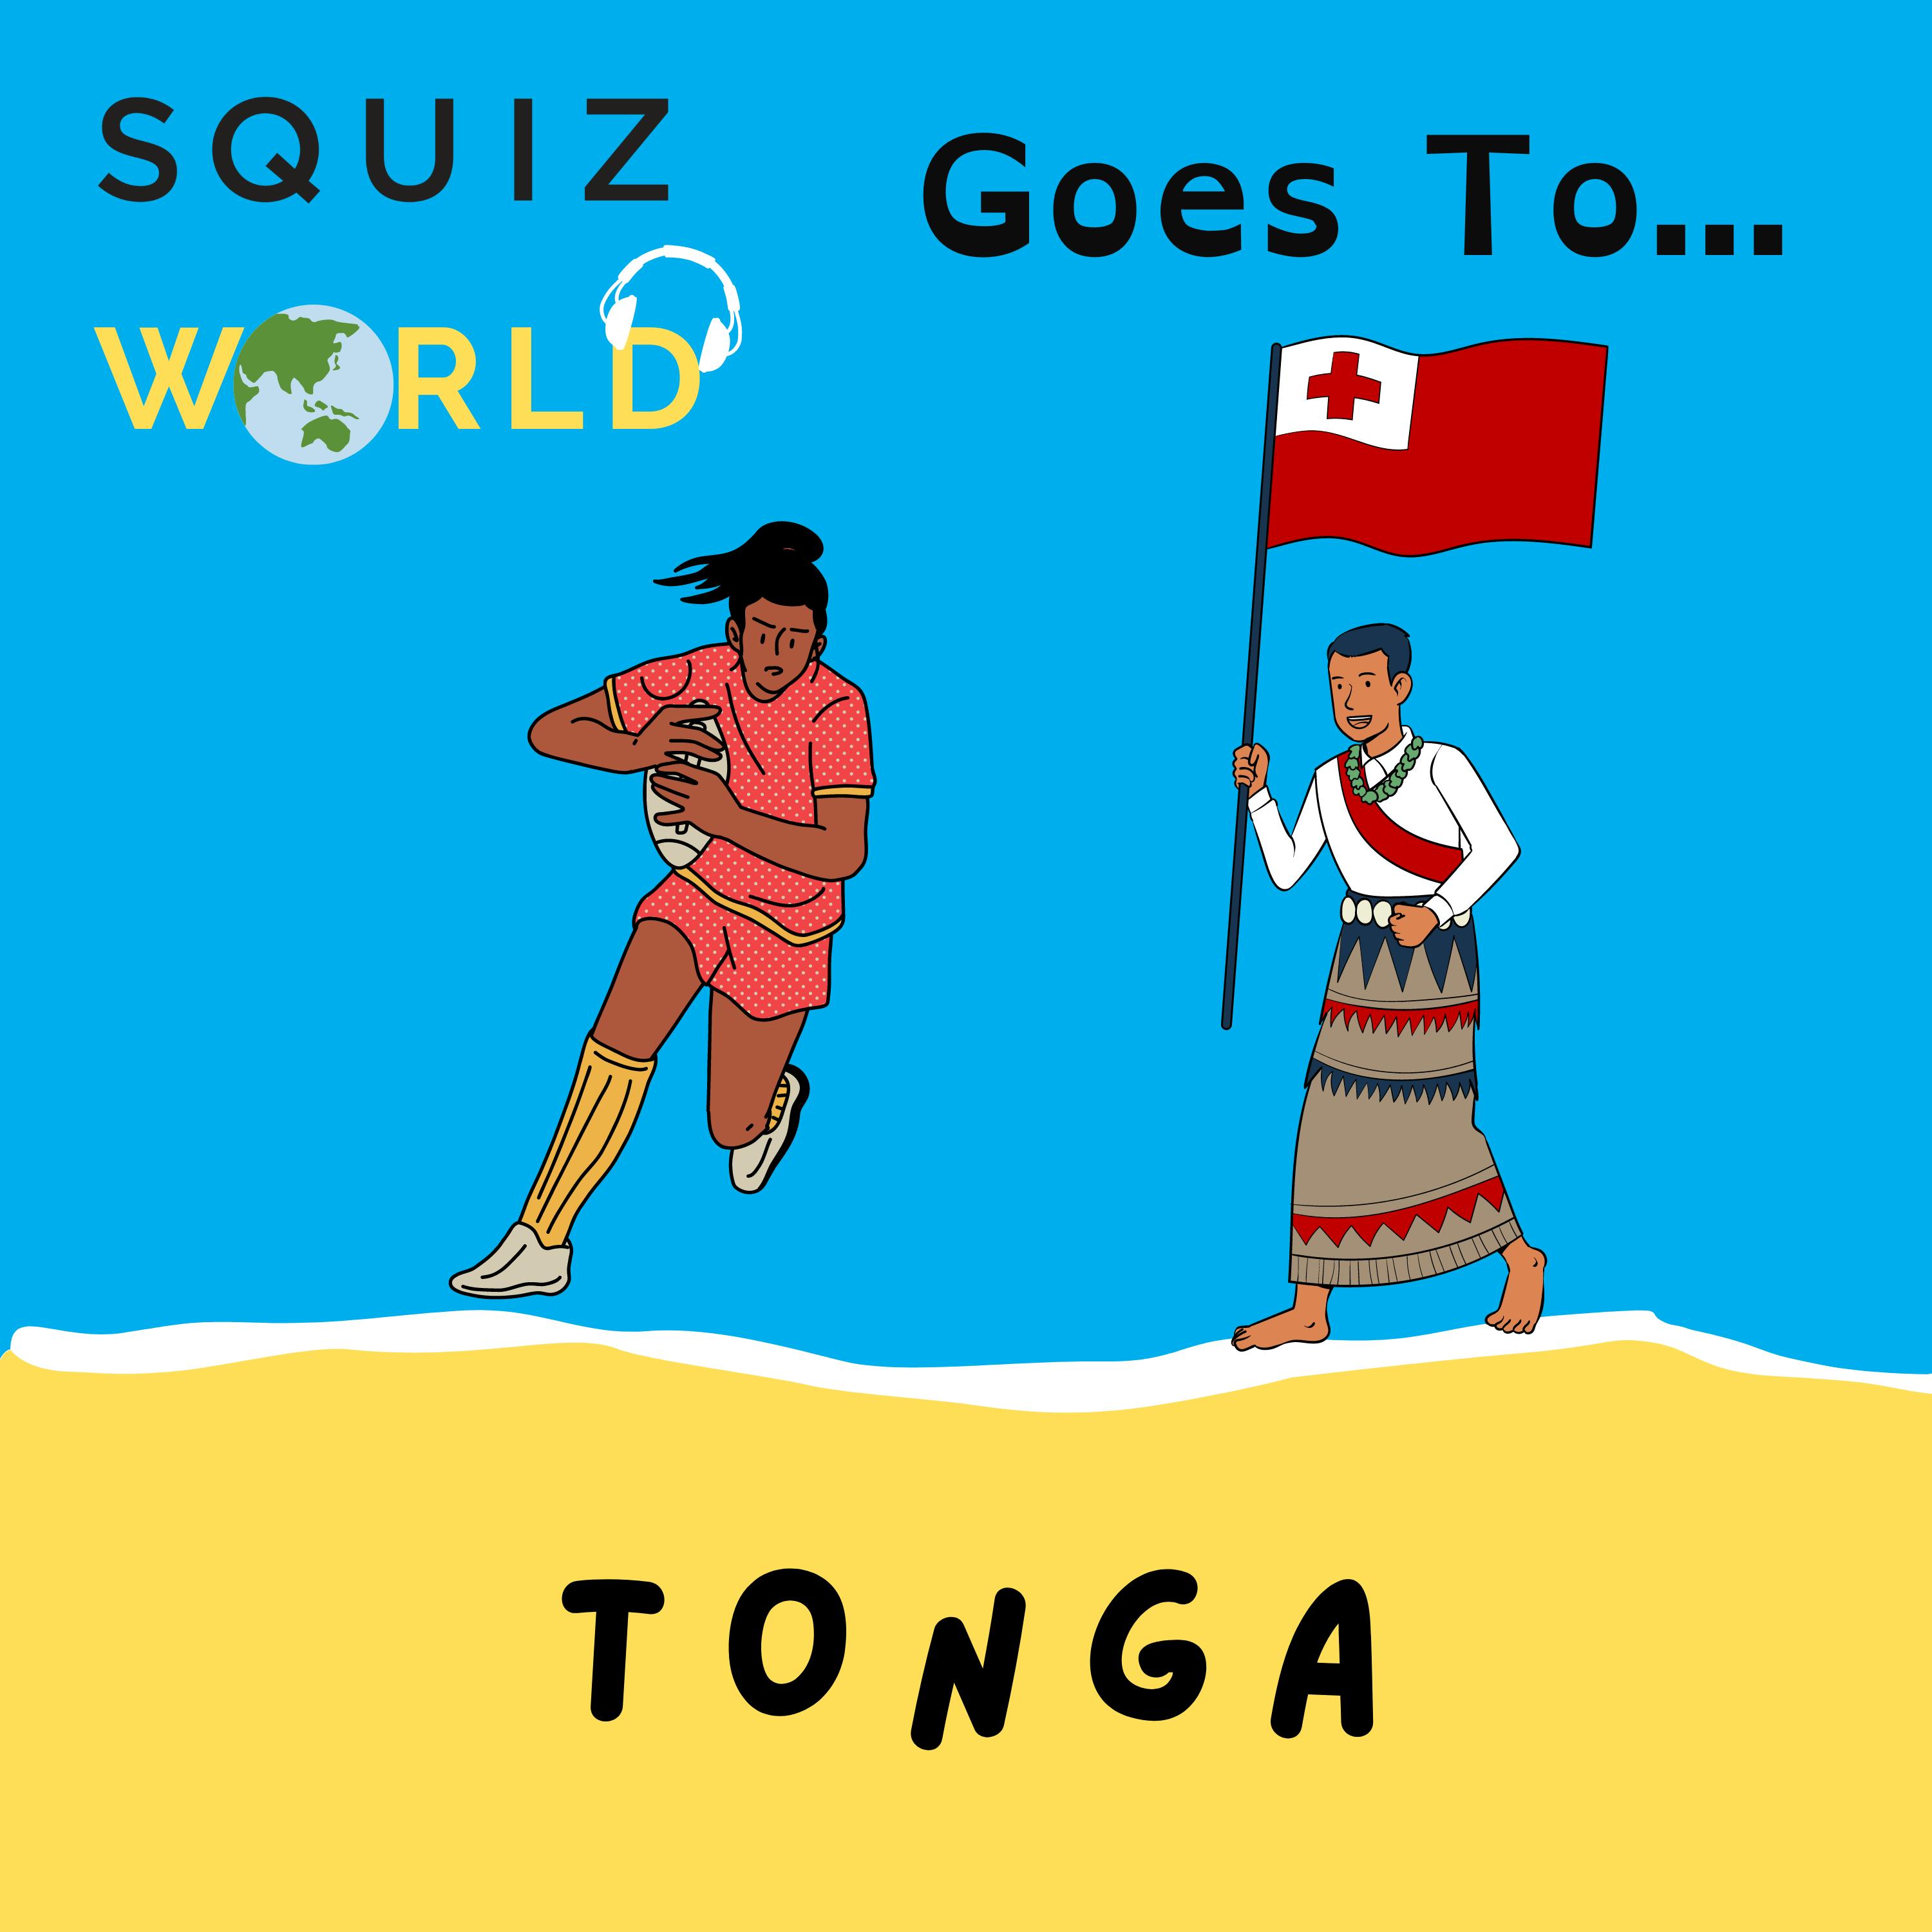 Squiz the World goes to... Tonga